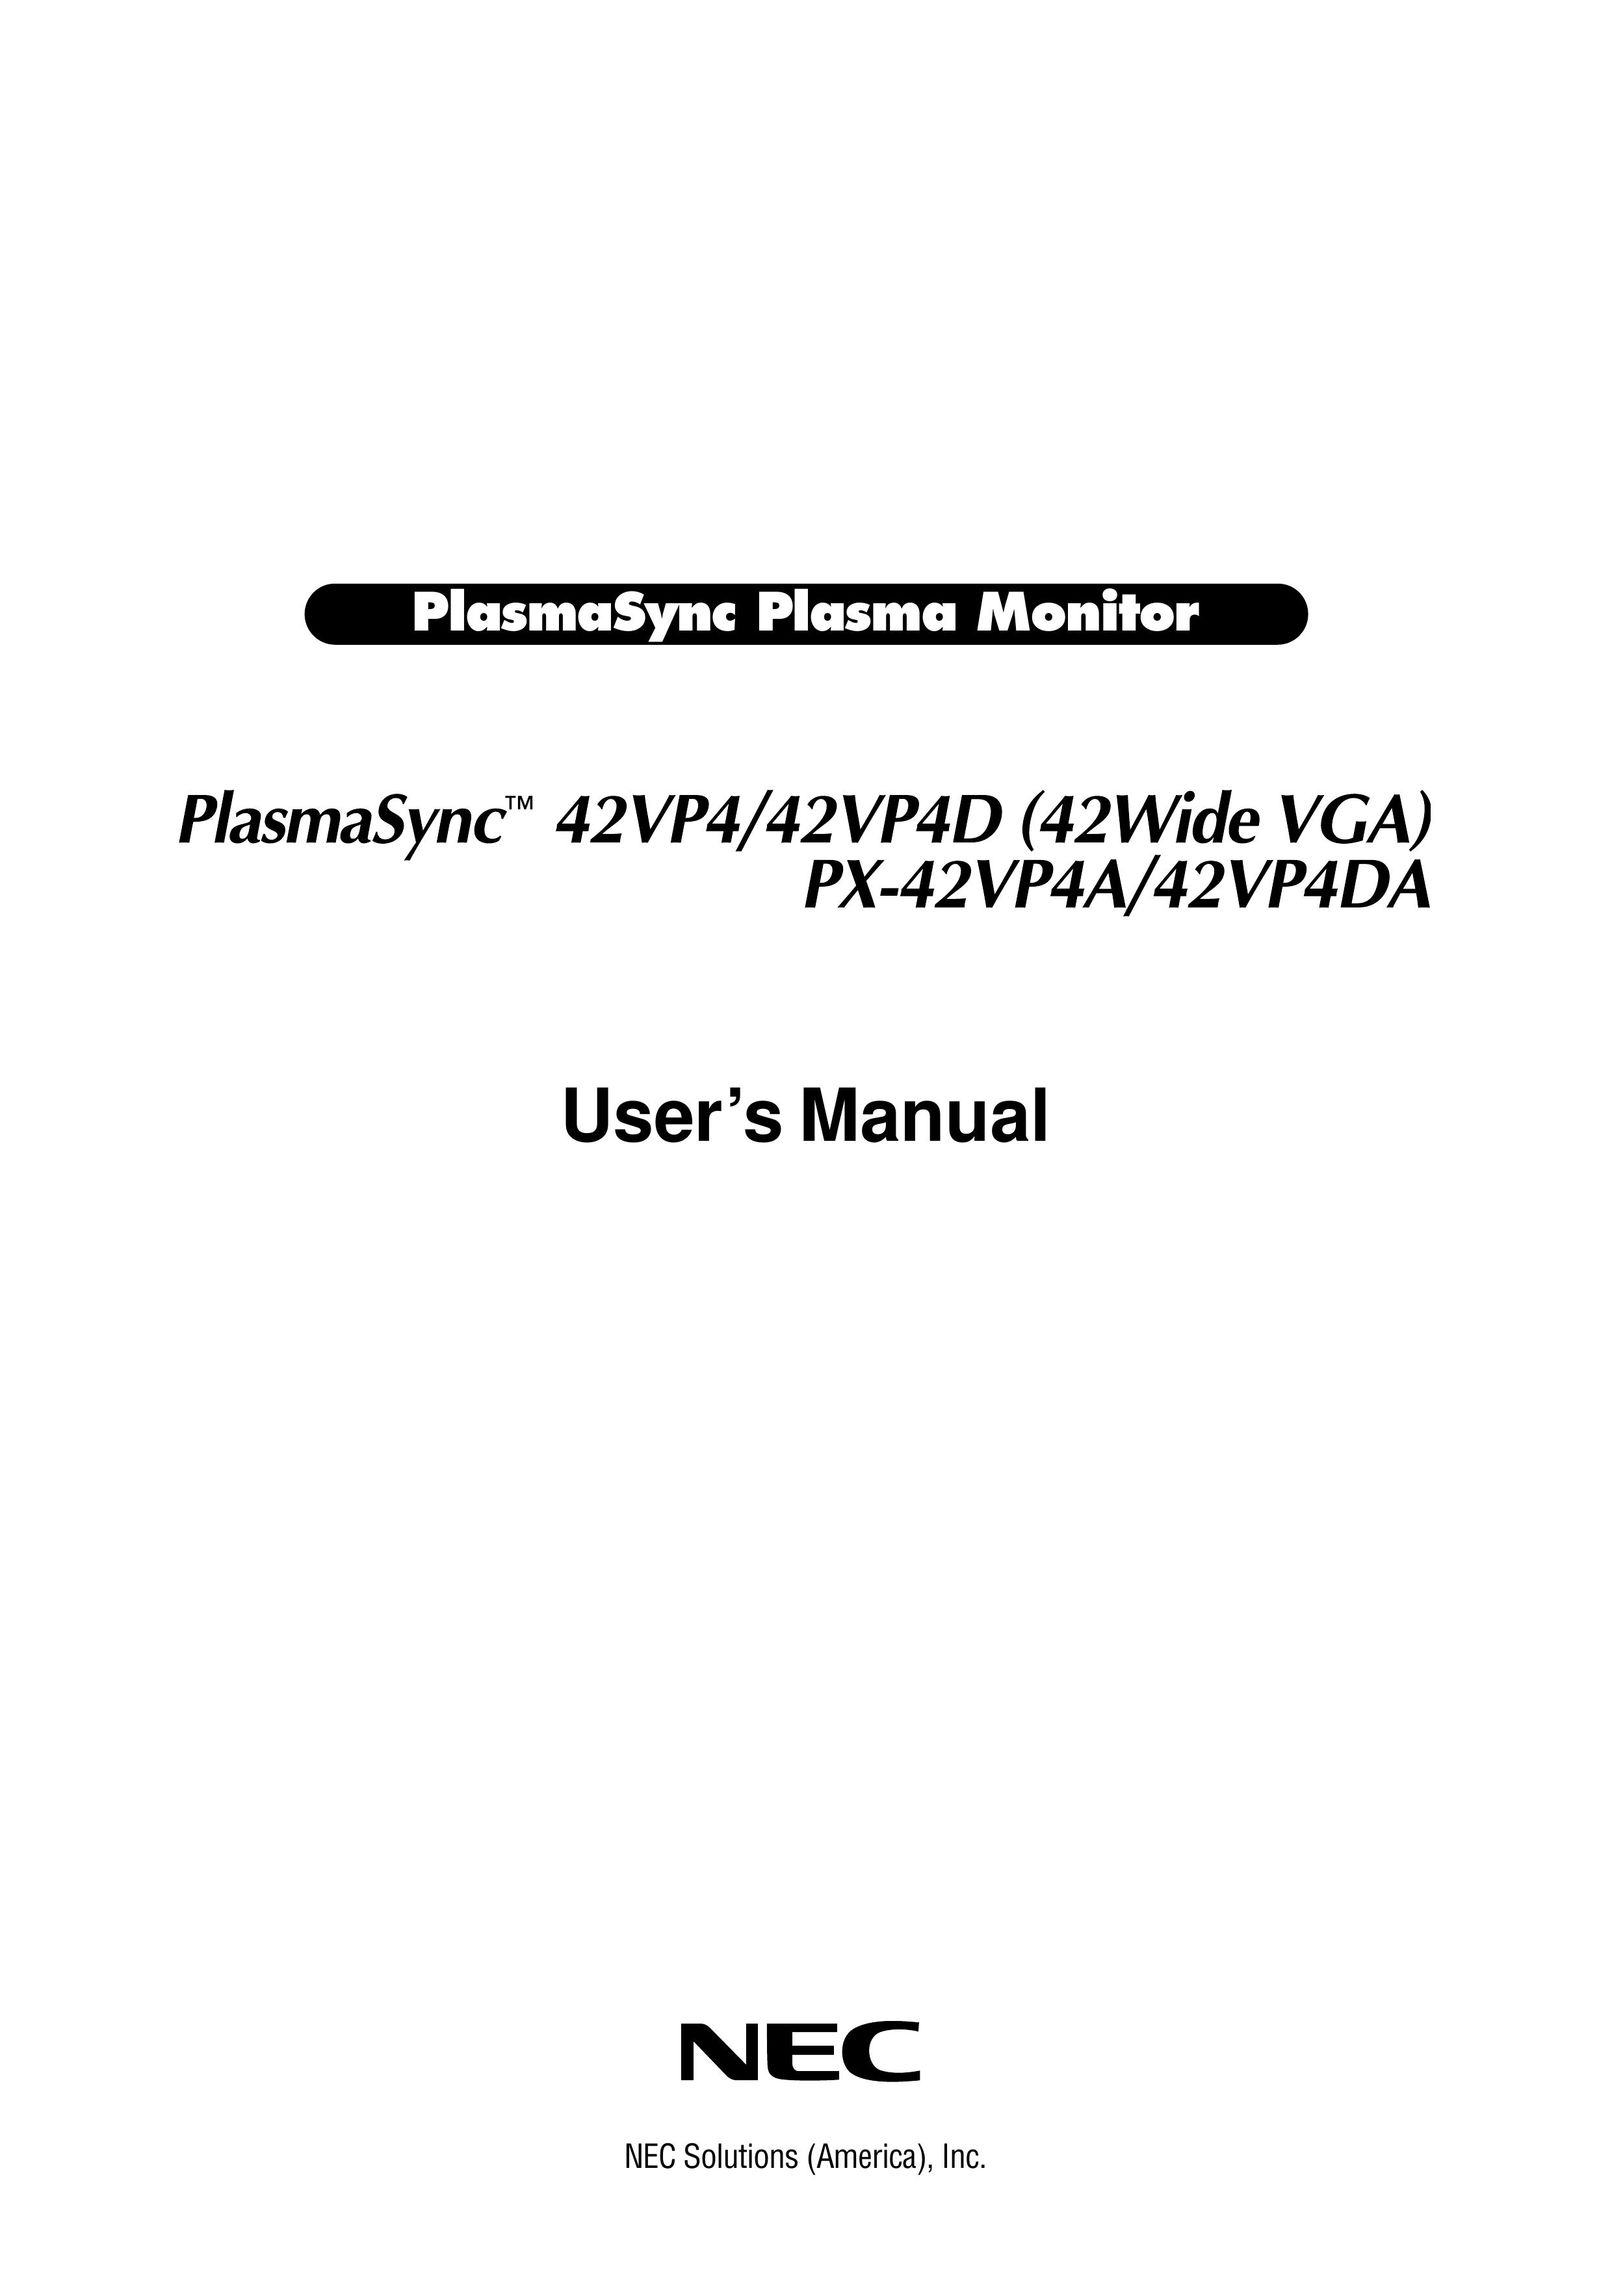 NEC 42VP4 Computer Monitor User Manual